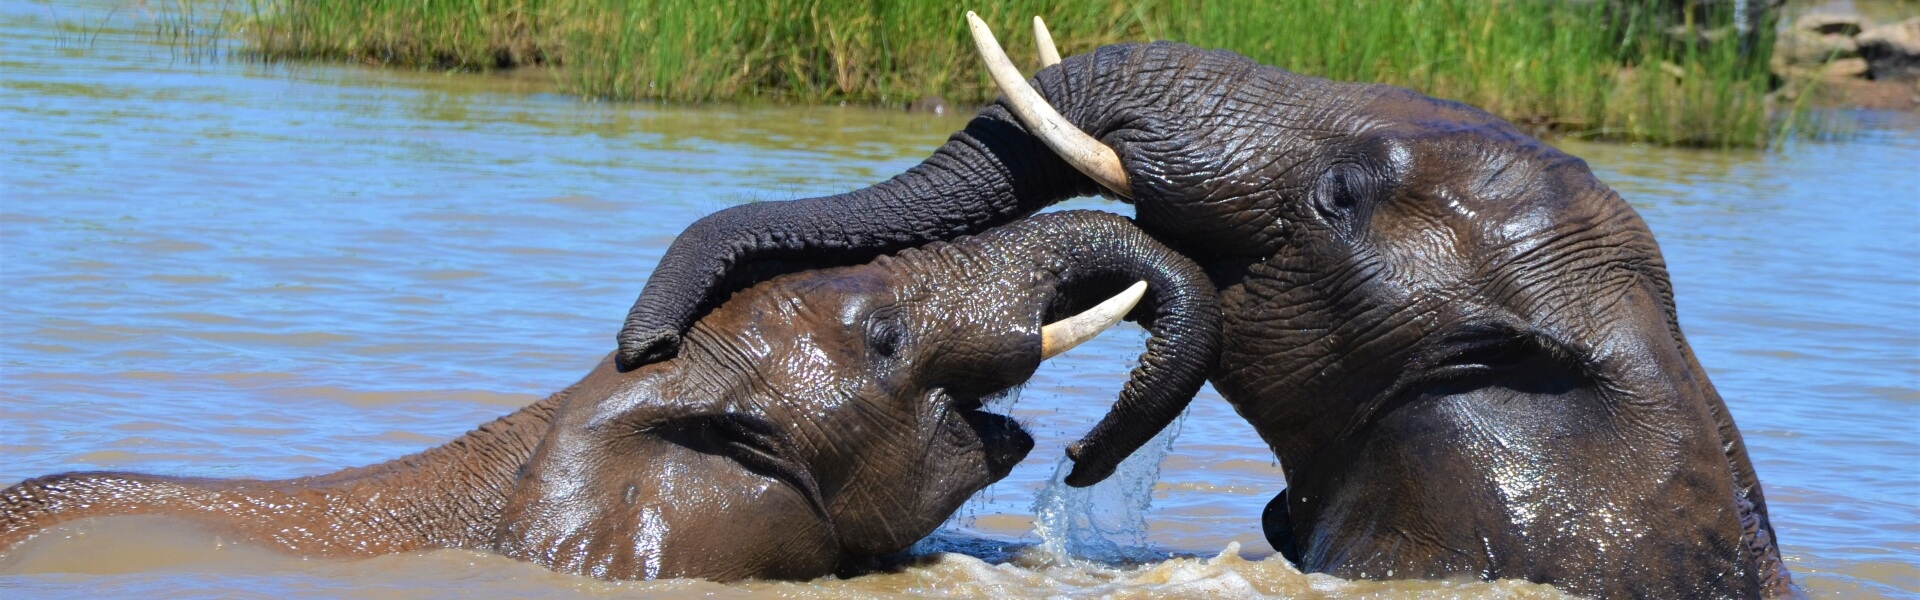 Malawi rondreizen: 2 in het water spelende olifanten